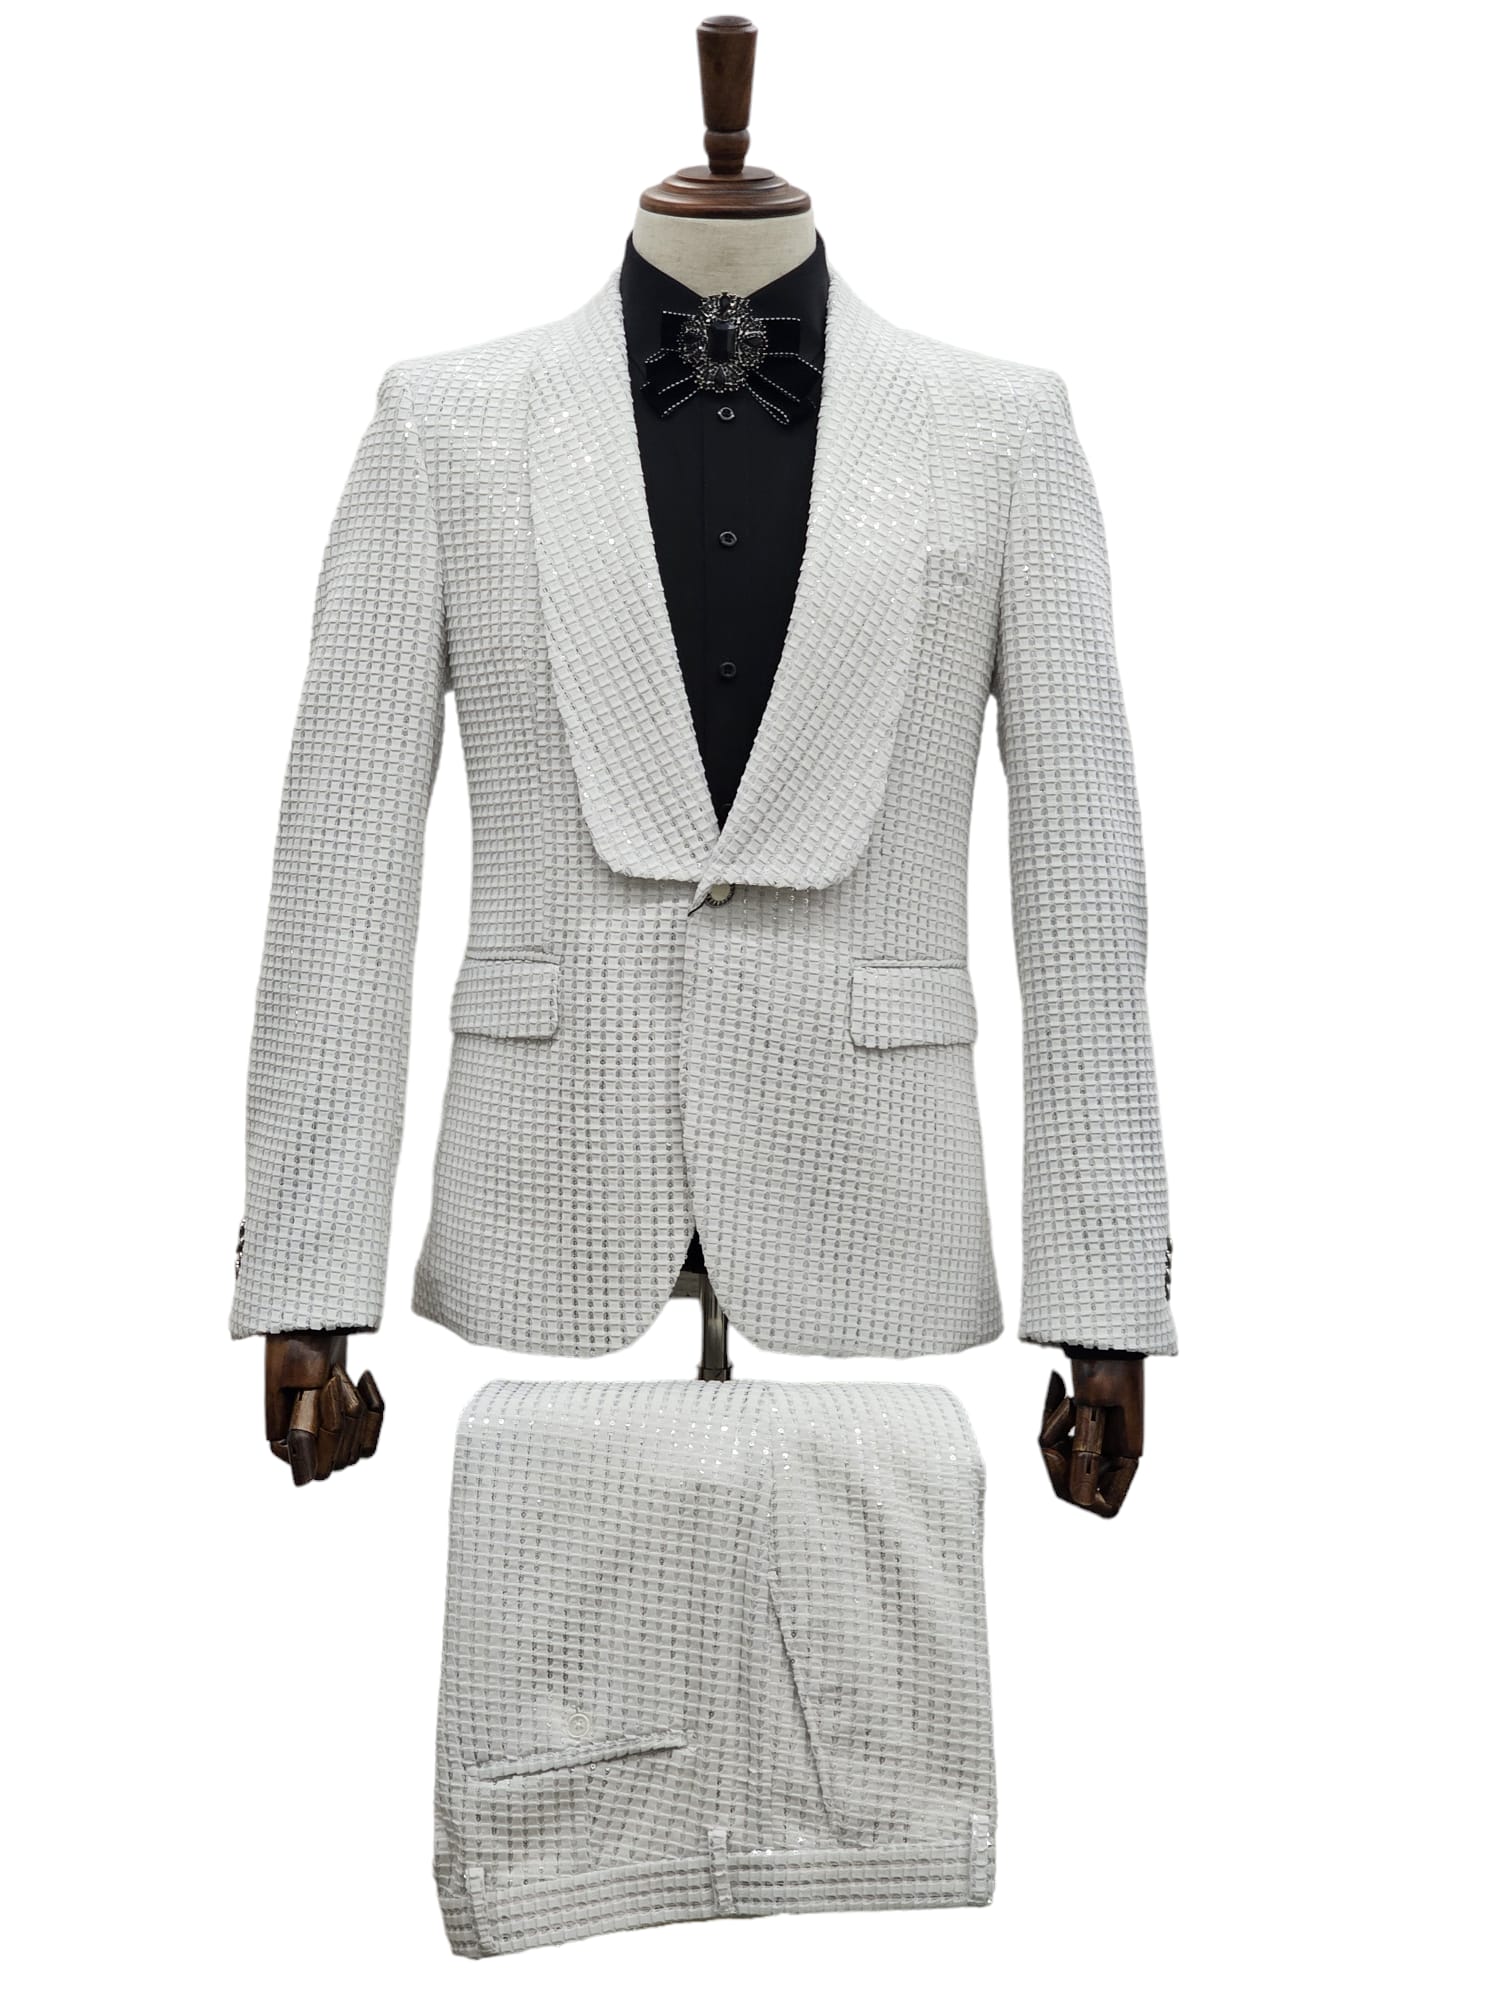 Giovanni Testi Green 2 Button Slim Fit Suit with Plaid Vest